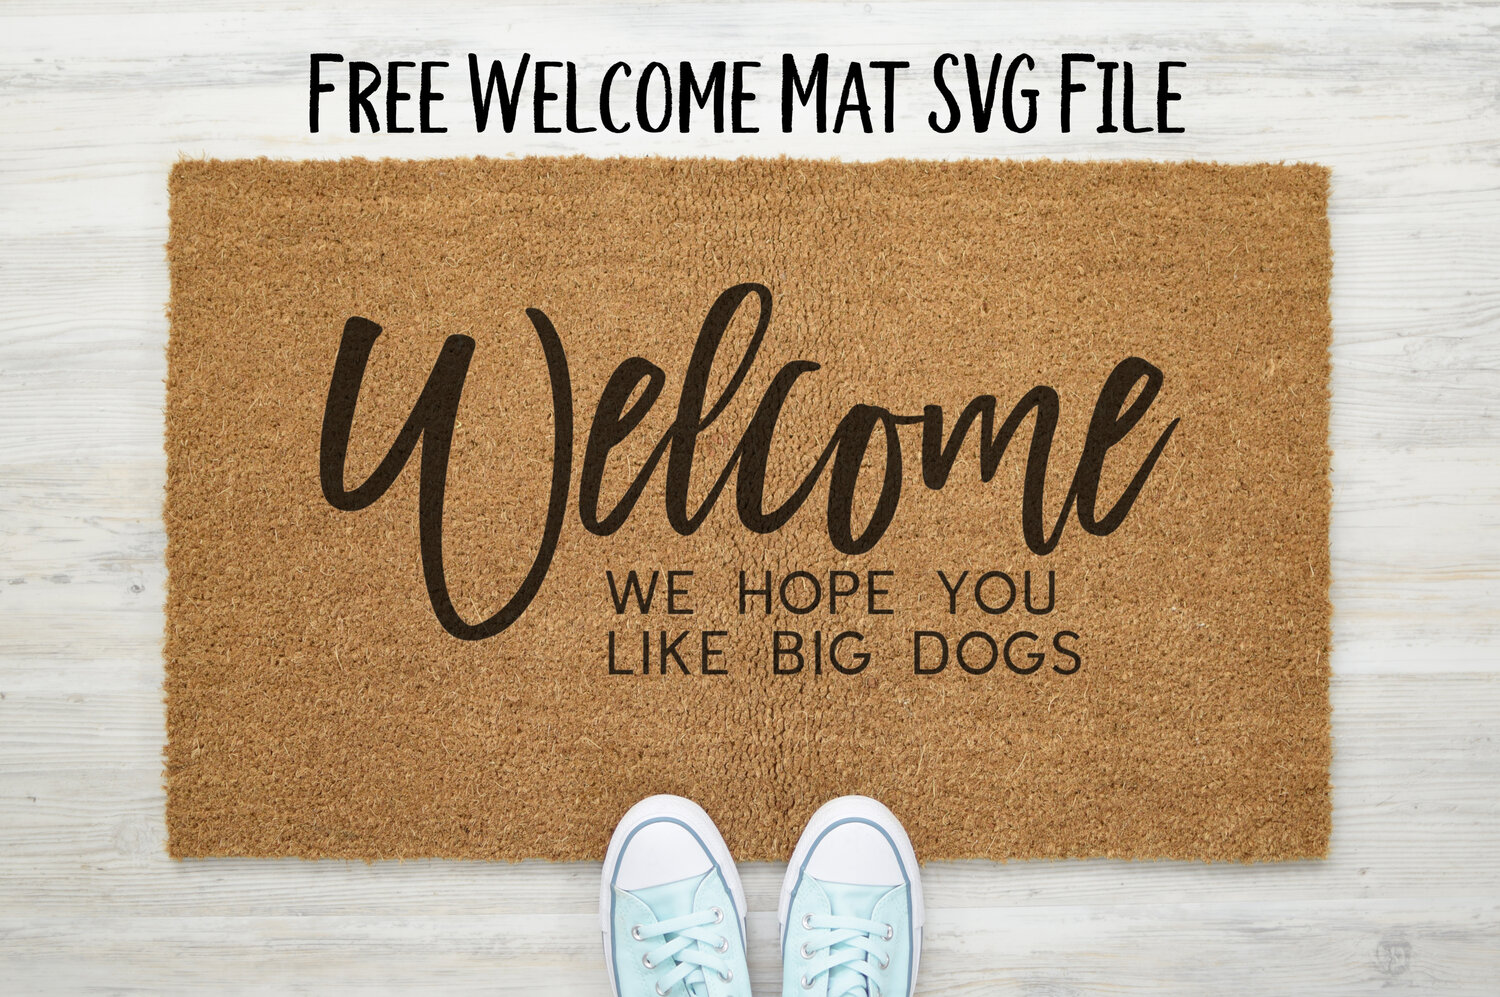 Welcome, We Hope You Like Big Dogs